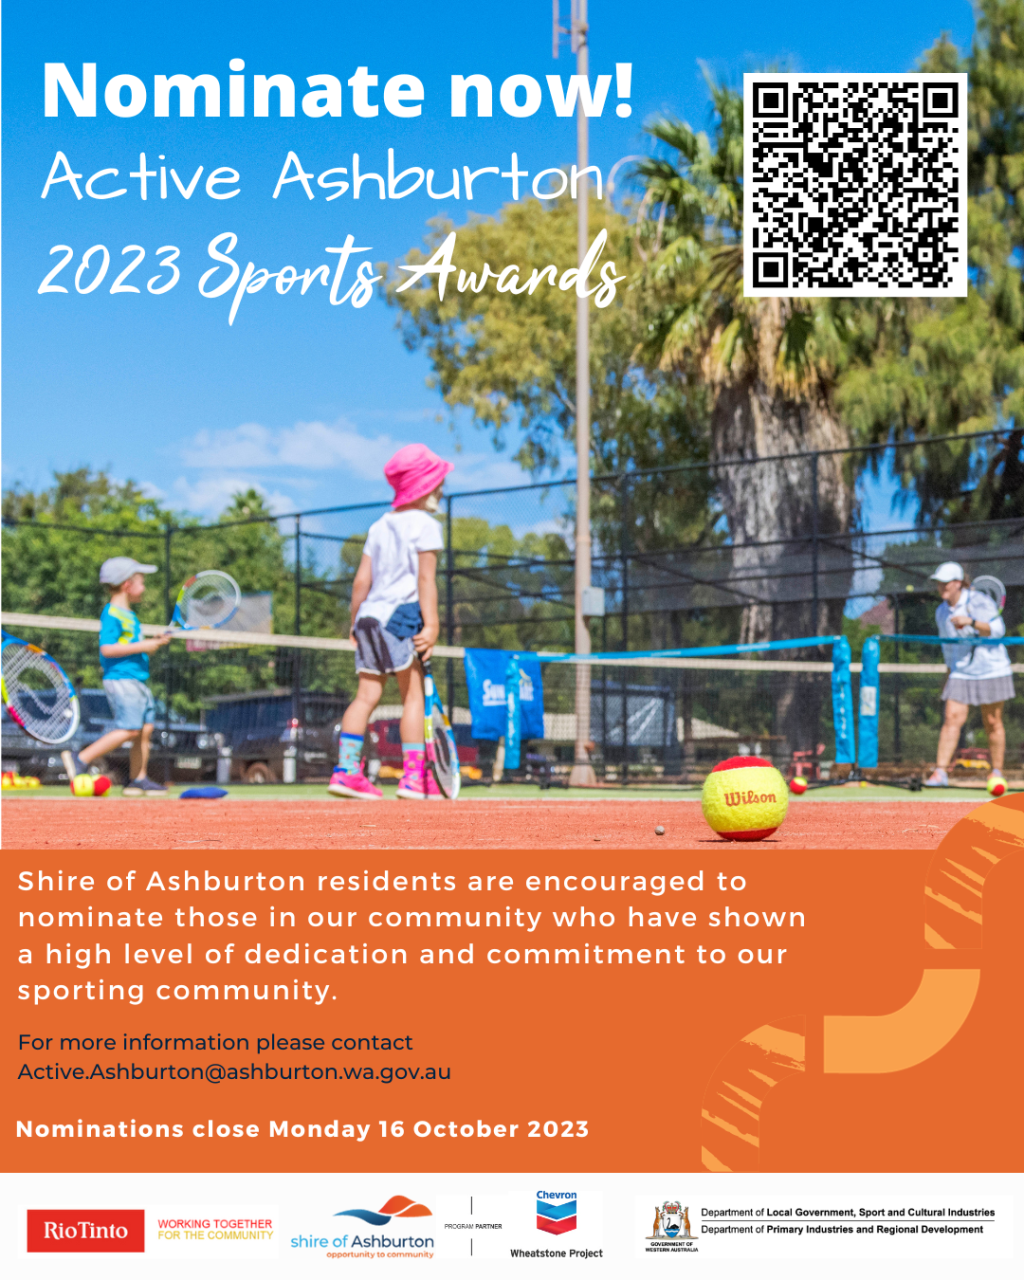 Shire of Ashburton launches Active Ashburton Sports Awards 2023